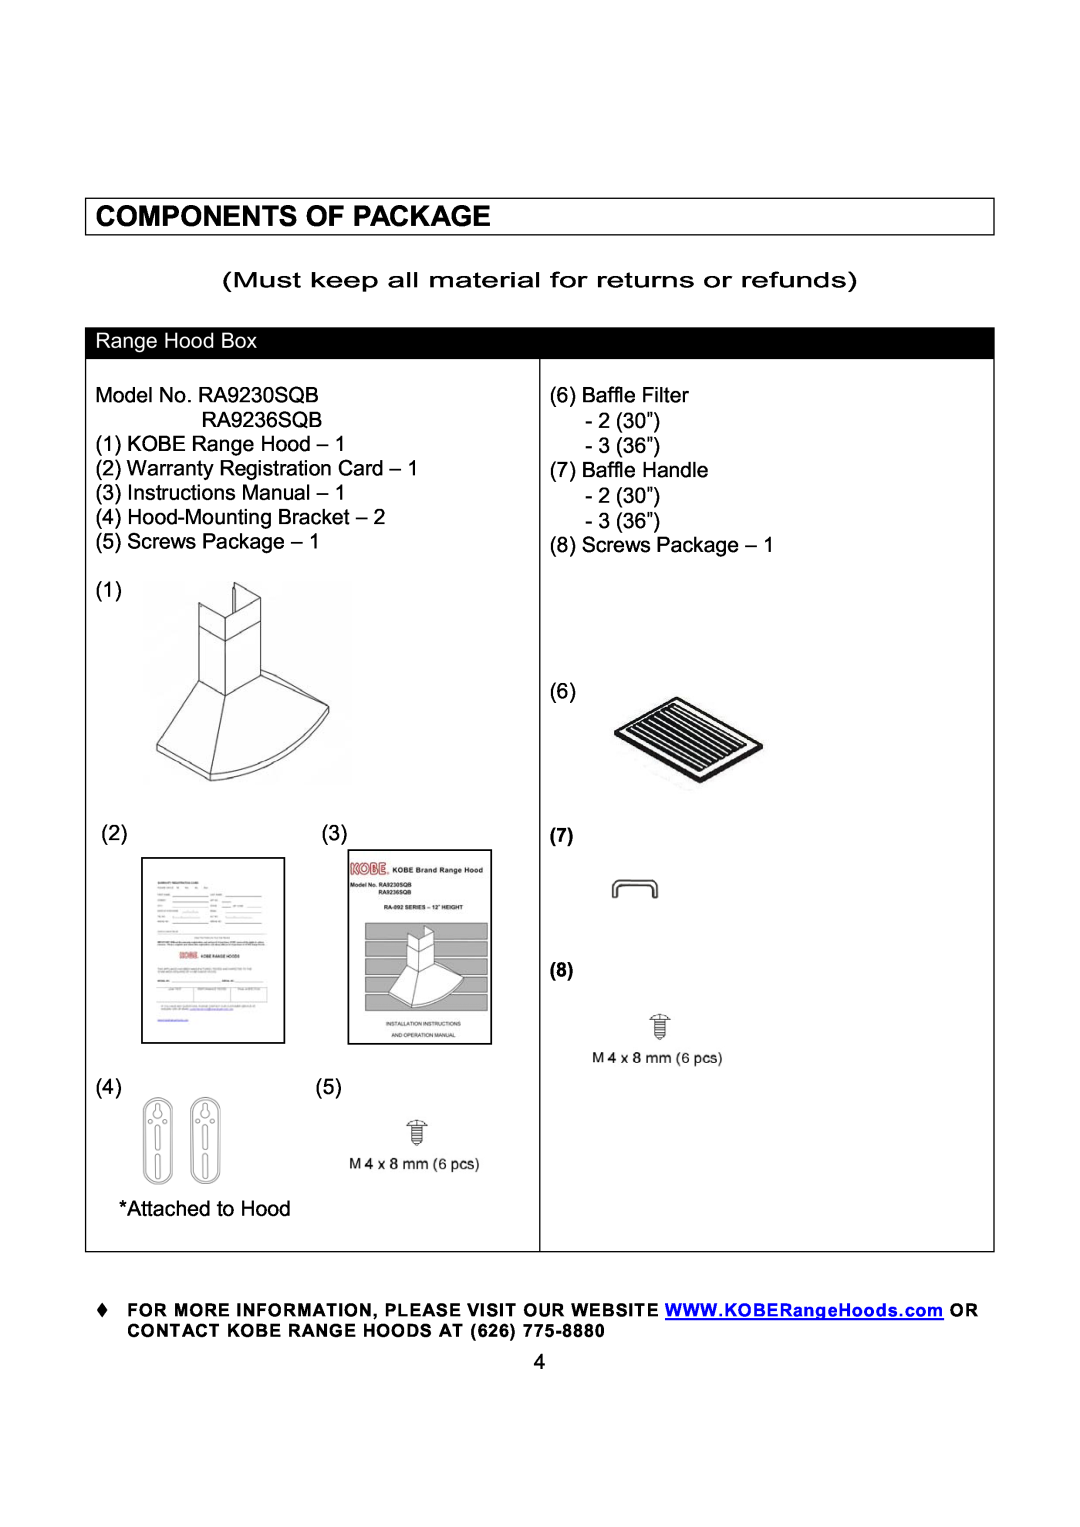 Kobe Range Hoods RA9236SQB, RA9230SQB installation instructions Components Of Package, Range Hood Box 